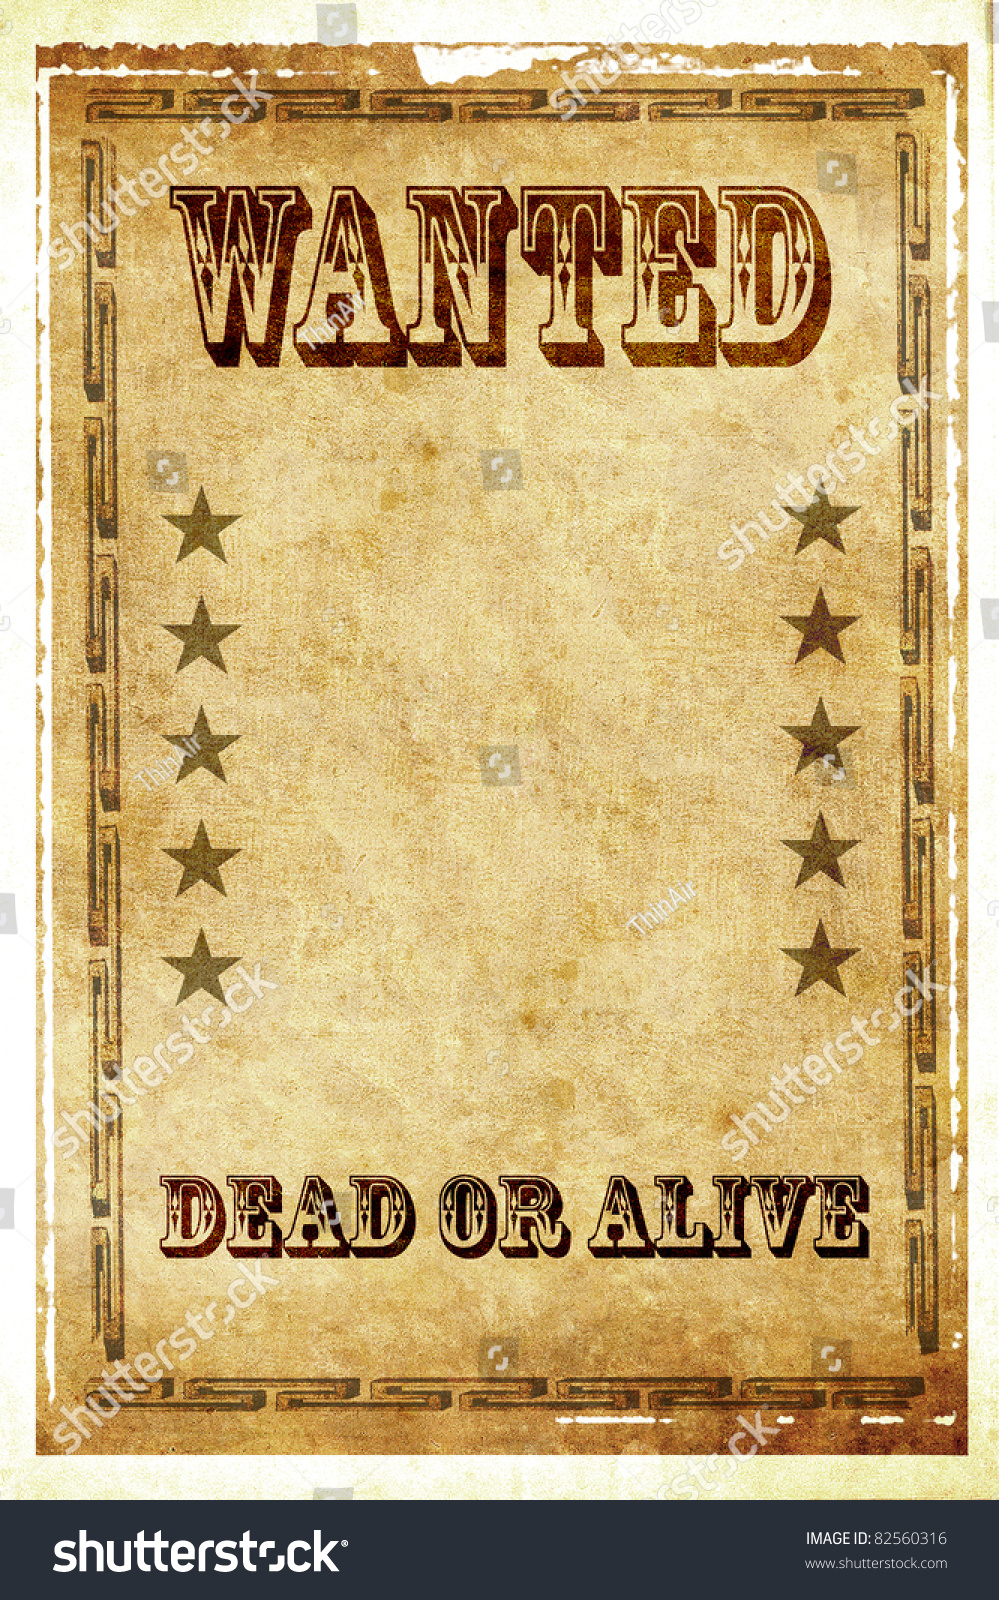 Wanted Dead Alive Vintage Poster Stock Illustration 82560316 - Shutterstock